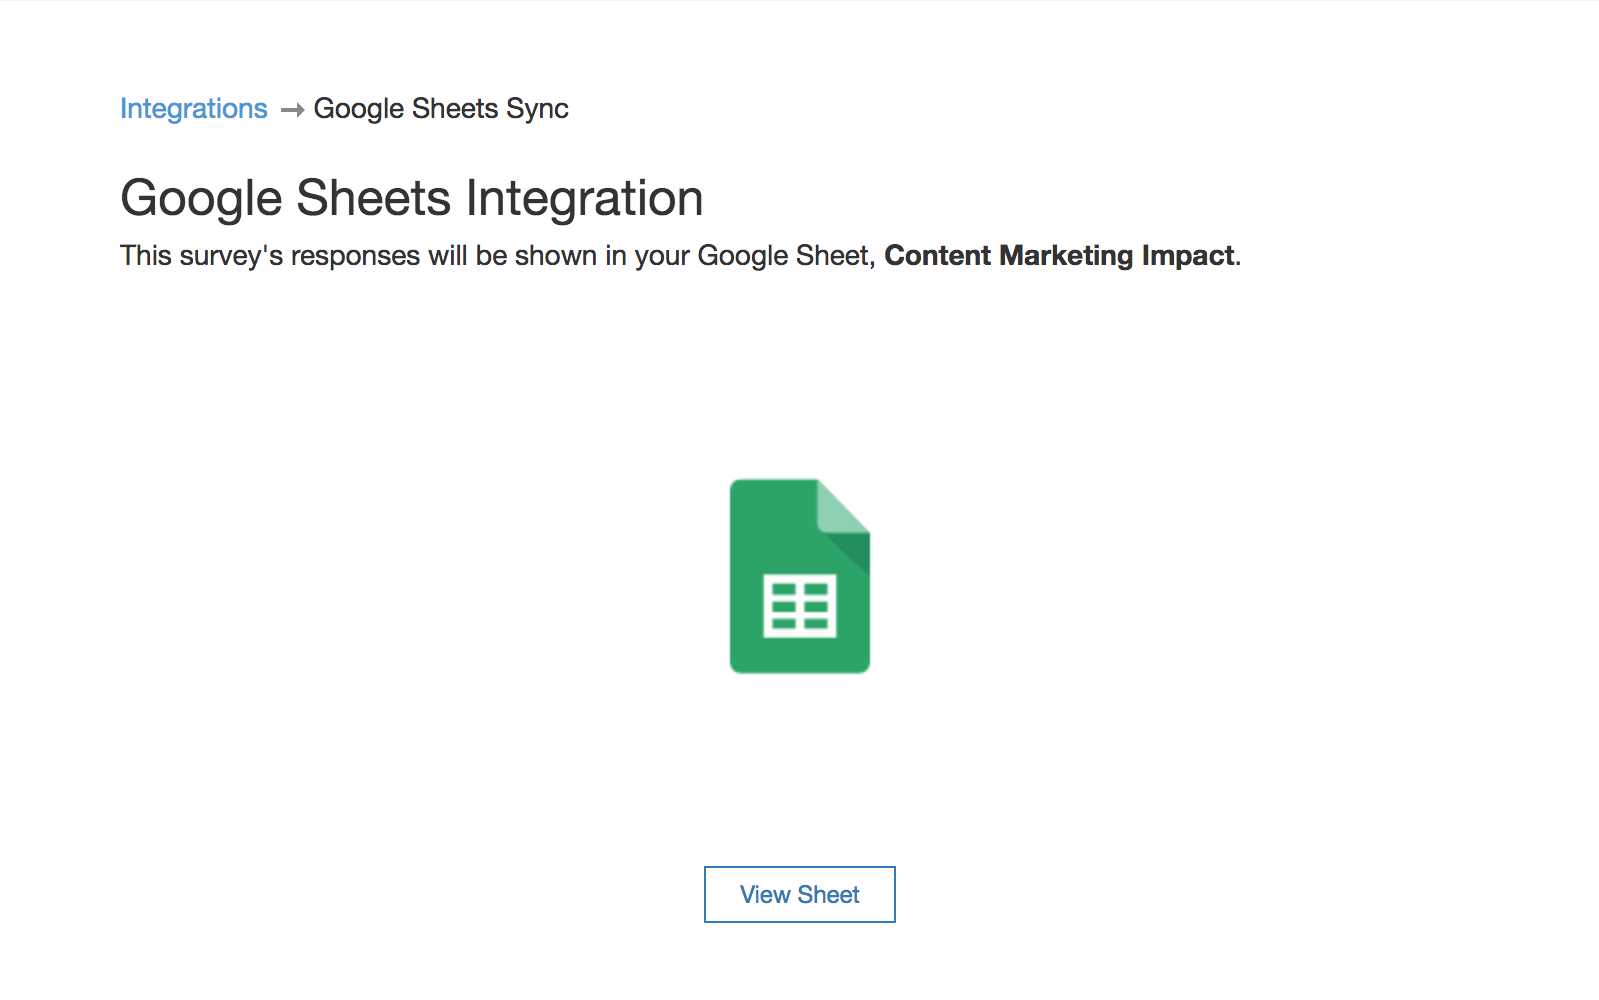 google-sheets-integration-view-sheet